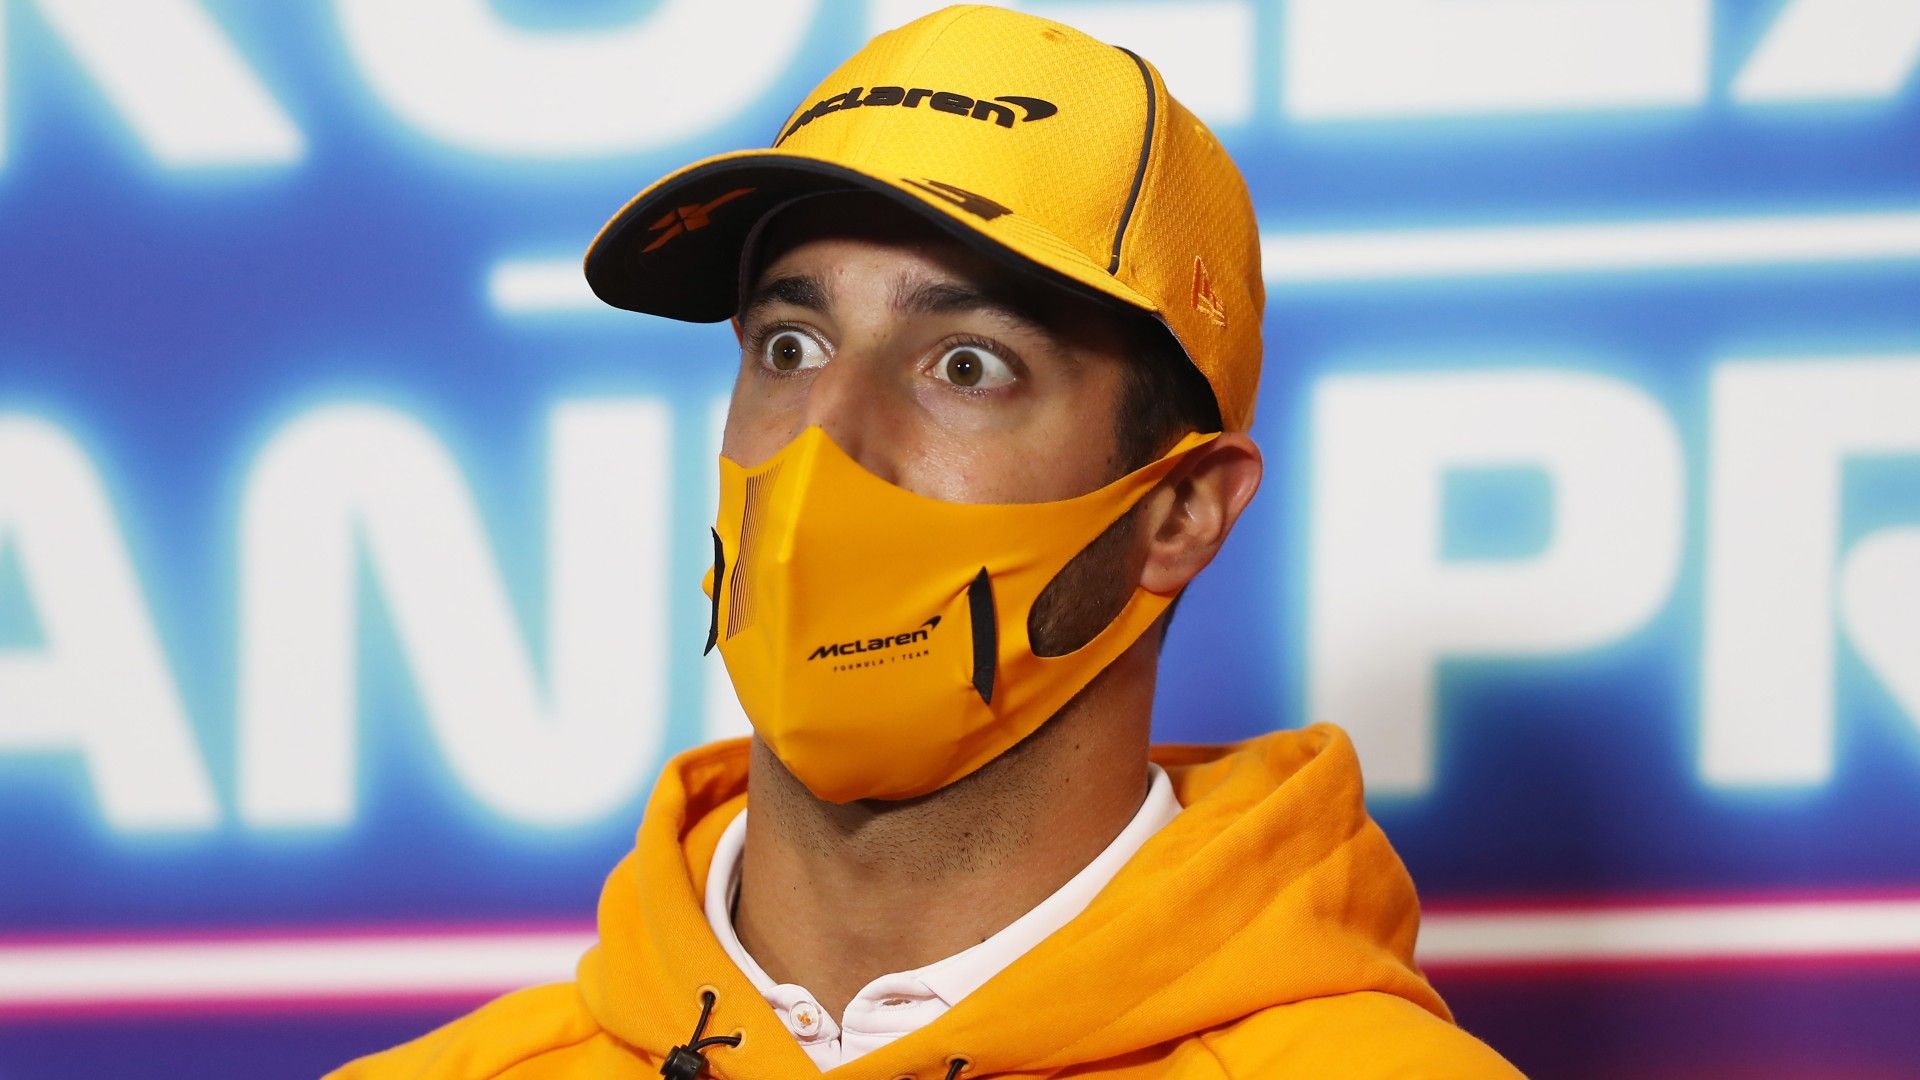 F1 great criticises Daniel Ricciardo's McLaren switch